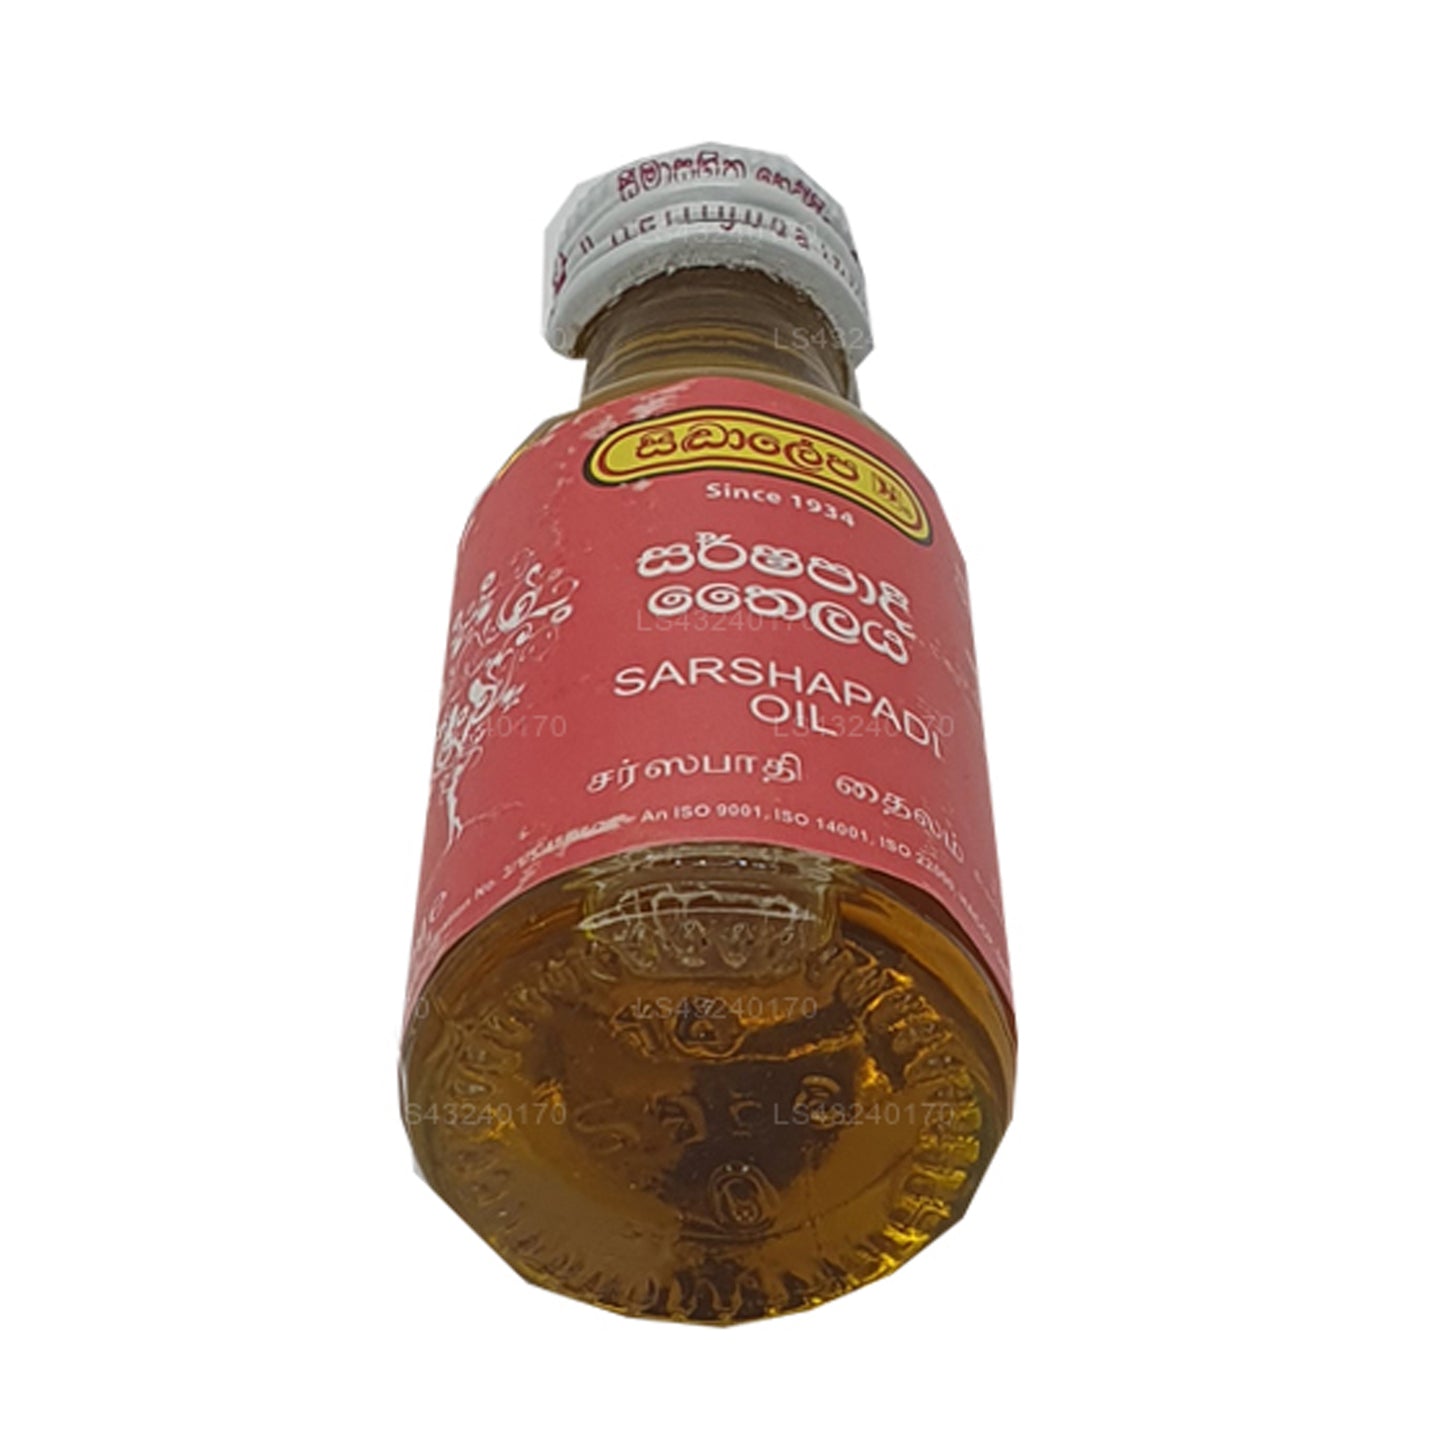 Huile Siddhalepa Sarshapadi (30 ml)